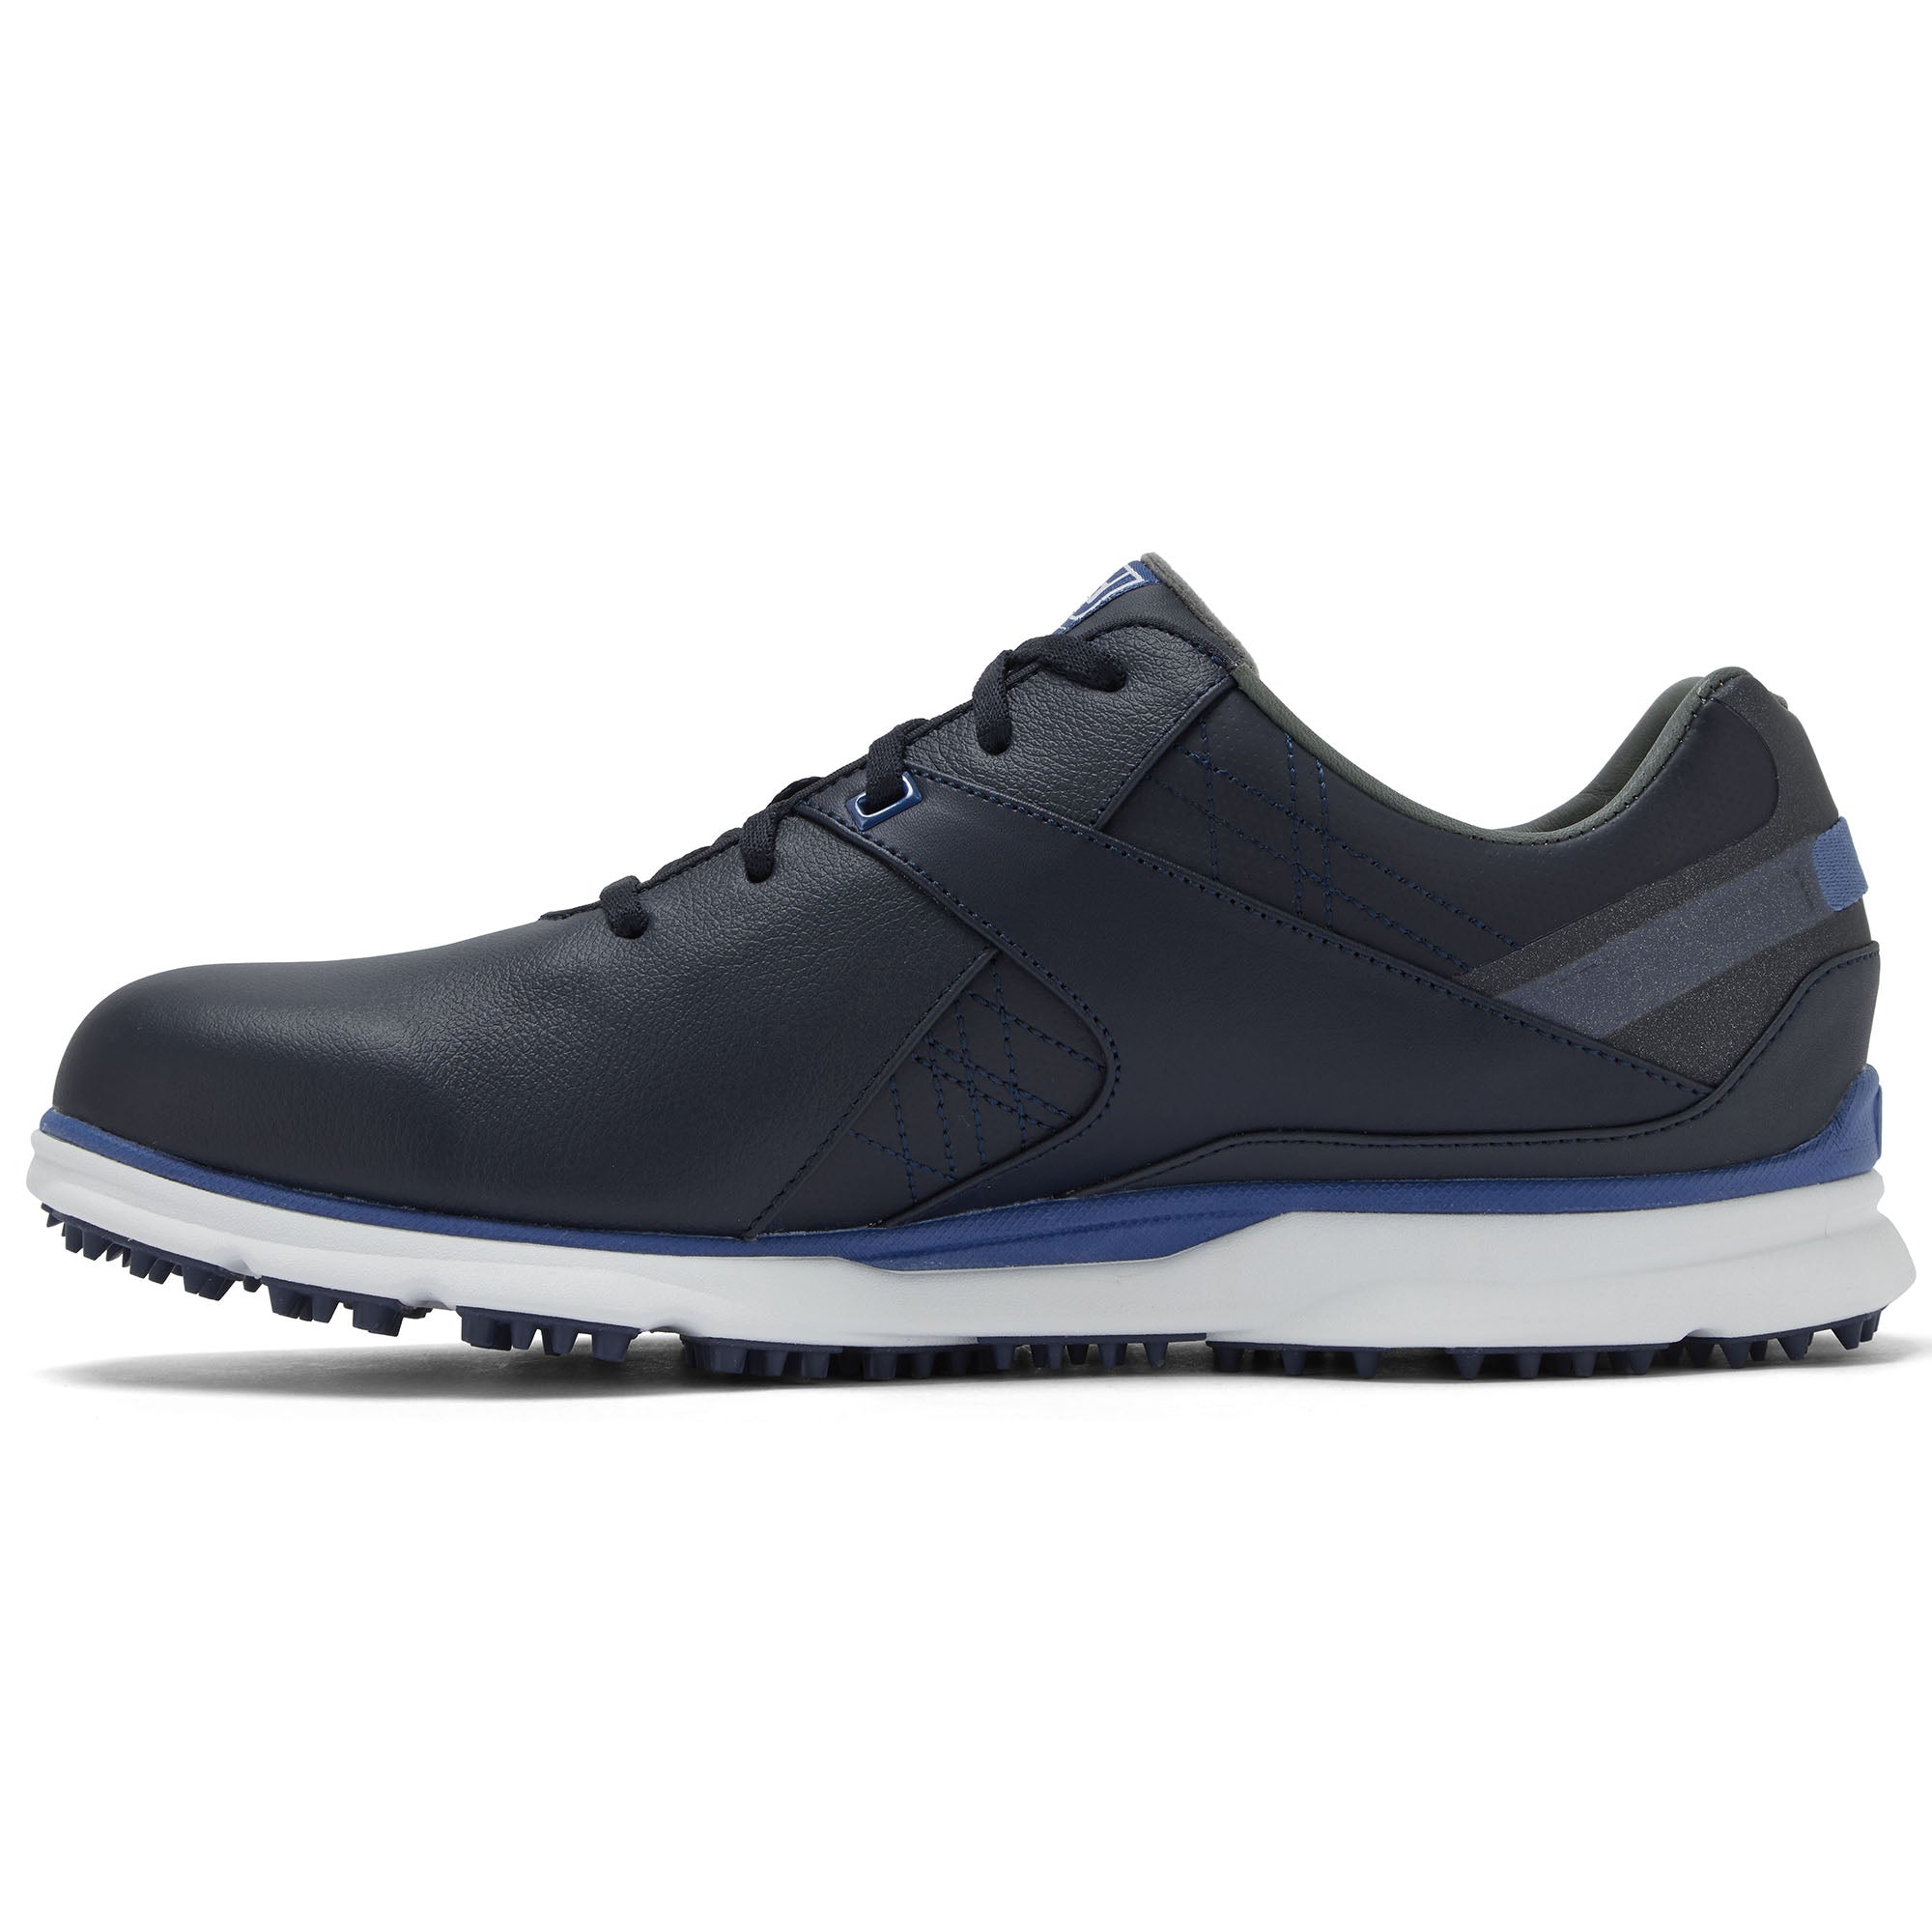 FootJoy Pro SL Golf Shoes 53812 Navy Light Blue | Function18